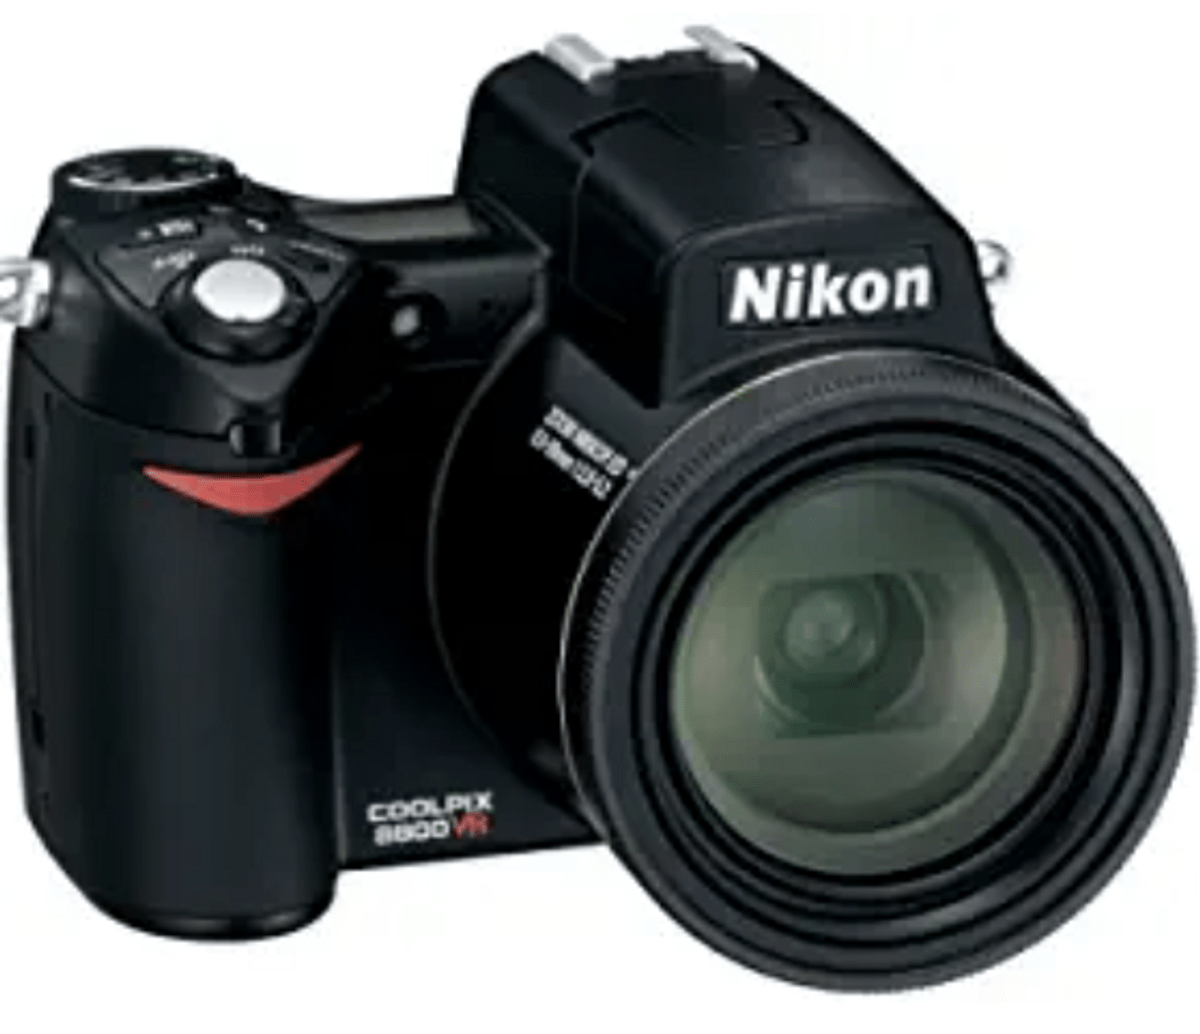 kamera digital Nikon Coolpix 8800